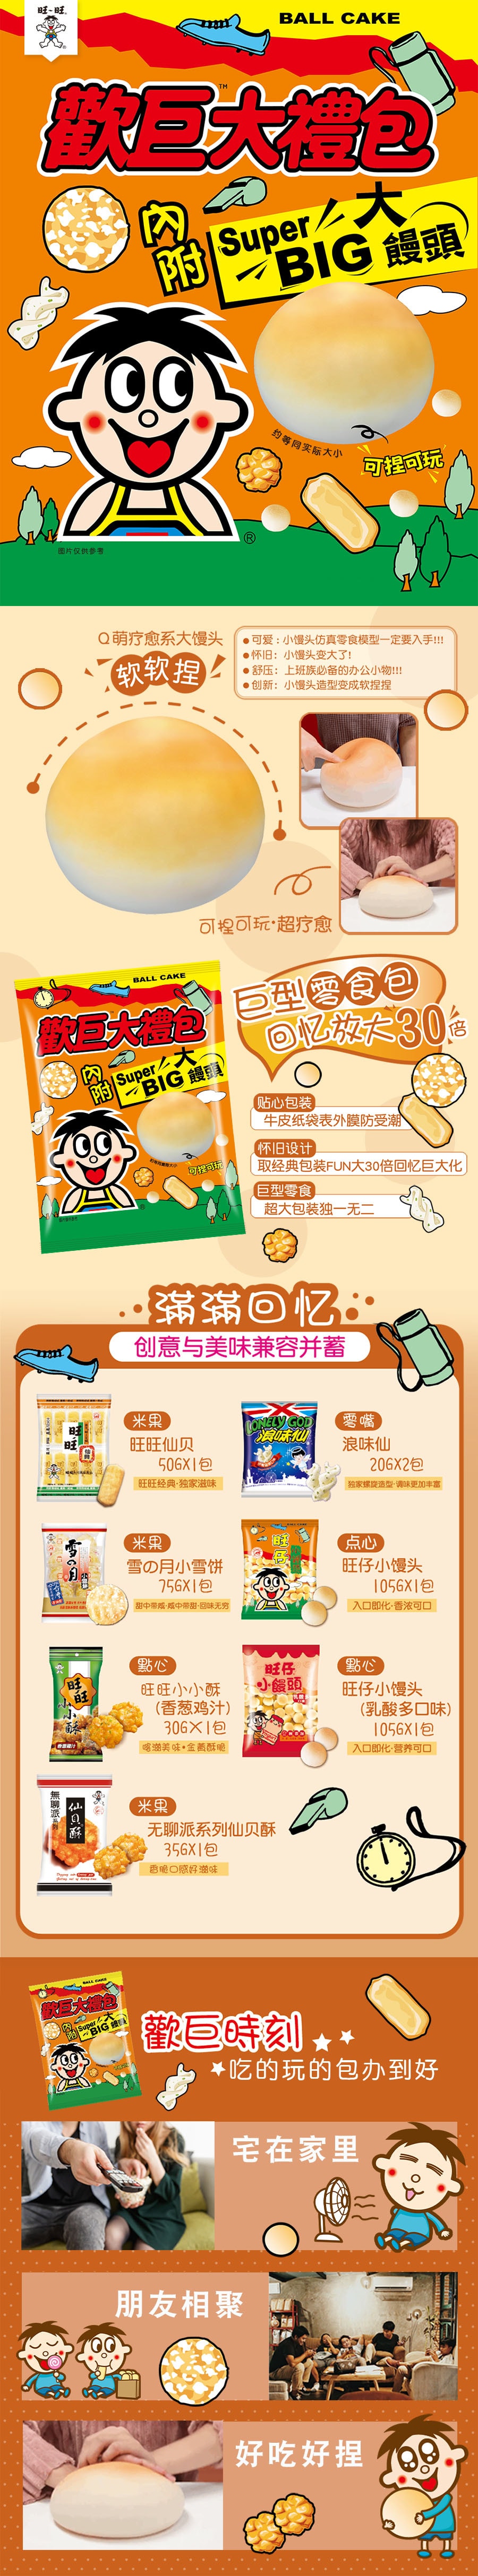 Taiwan Happy Together Huge Variety Snacks Bag - Super BIG Ball Cake 2Bags 8800g (2 Free Blind Box)